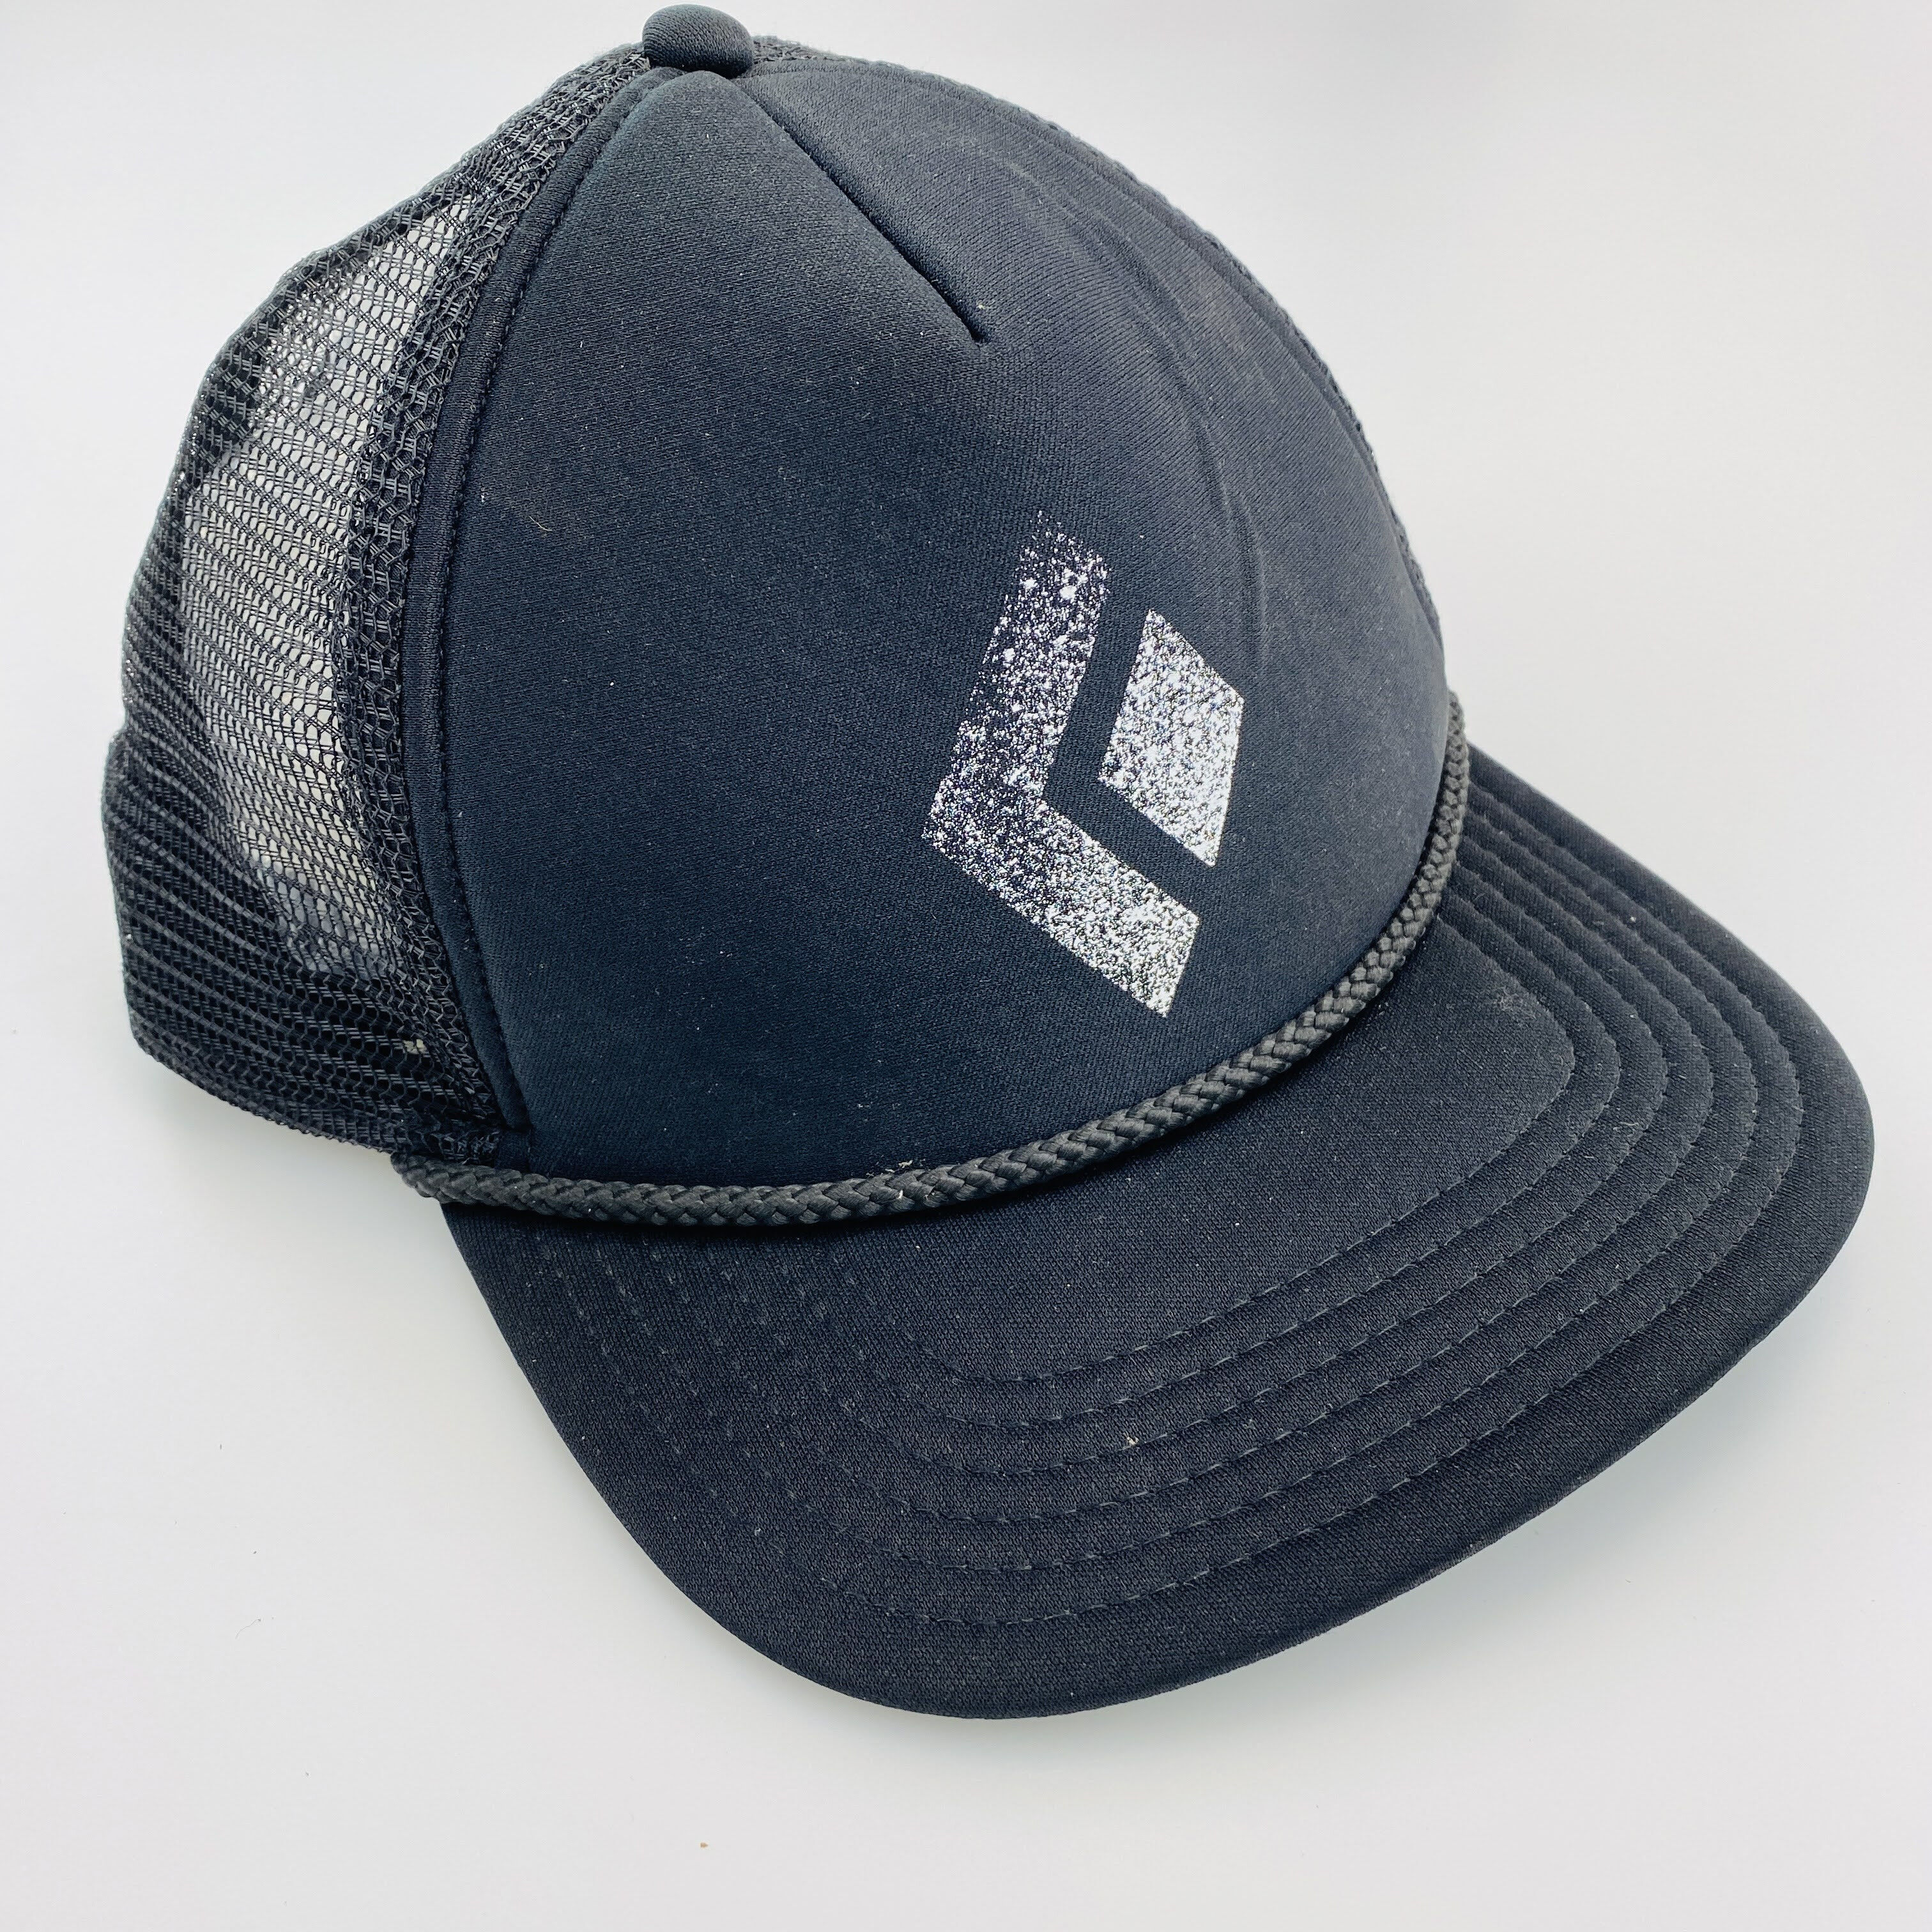 Black Diamond Flat Bill Trucker Hat - Seconde main Casquette homme - Noir - Taille unique | Hardloop